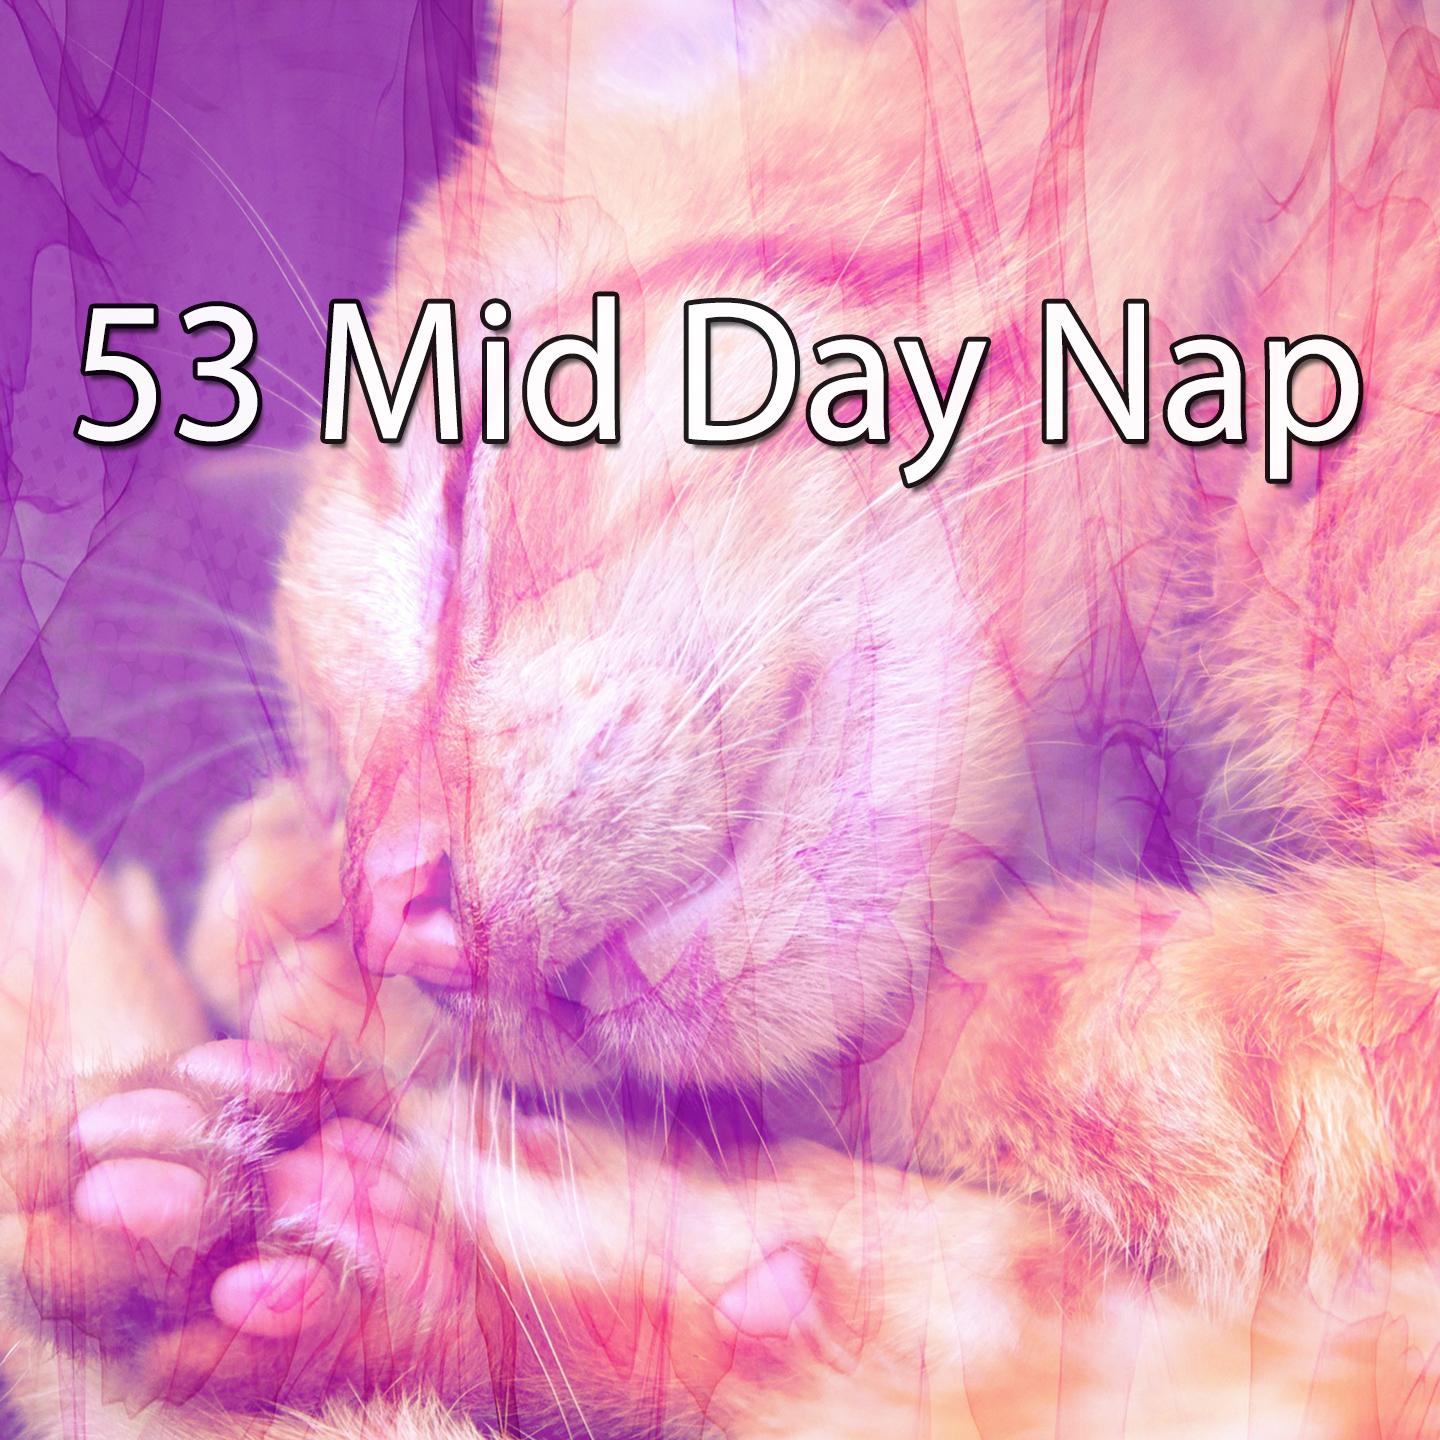 53 Mid Day Nap